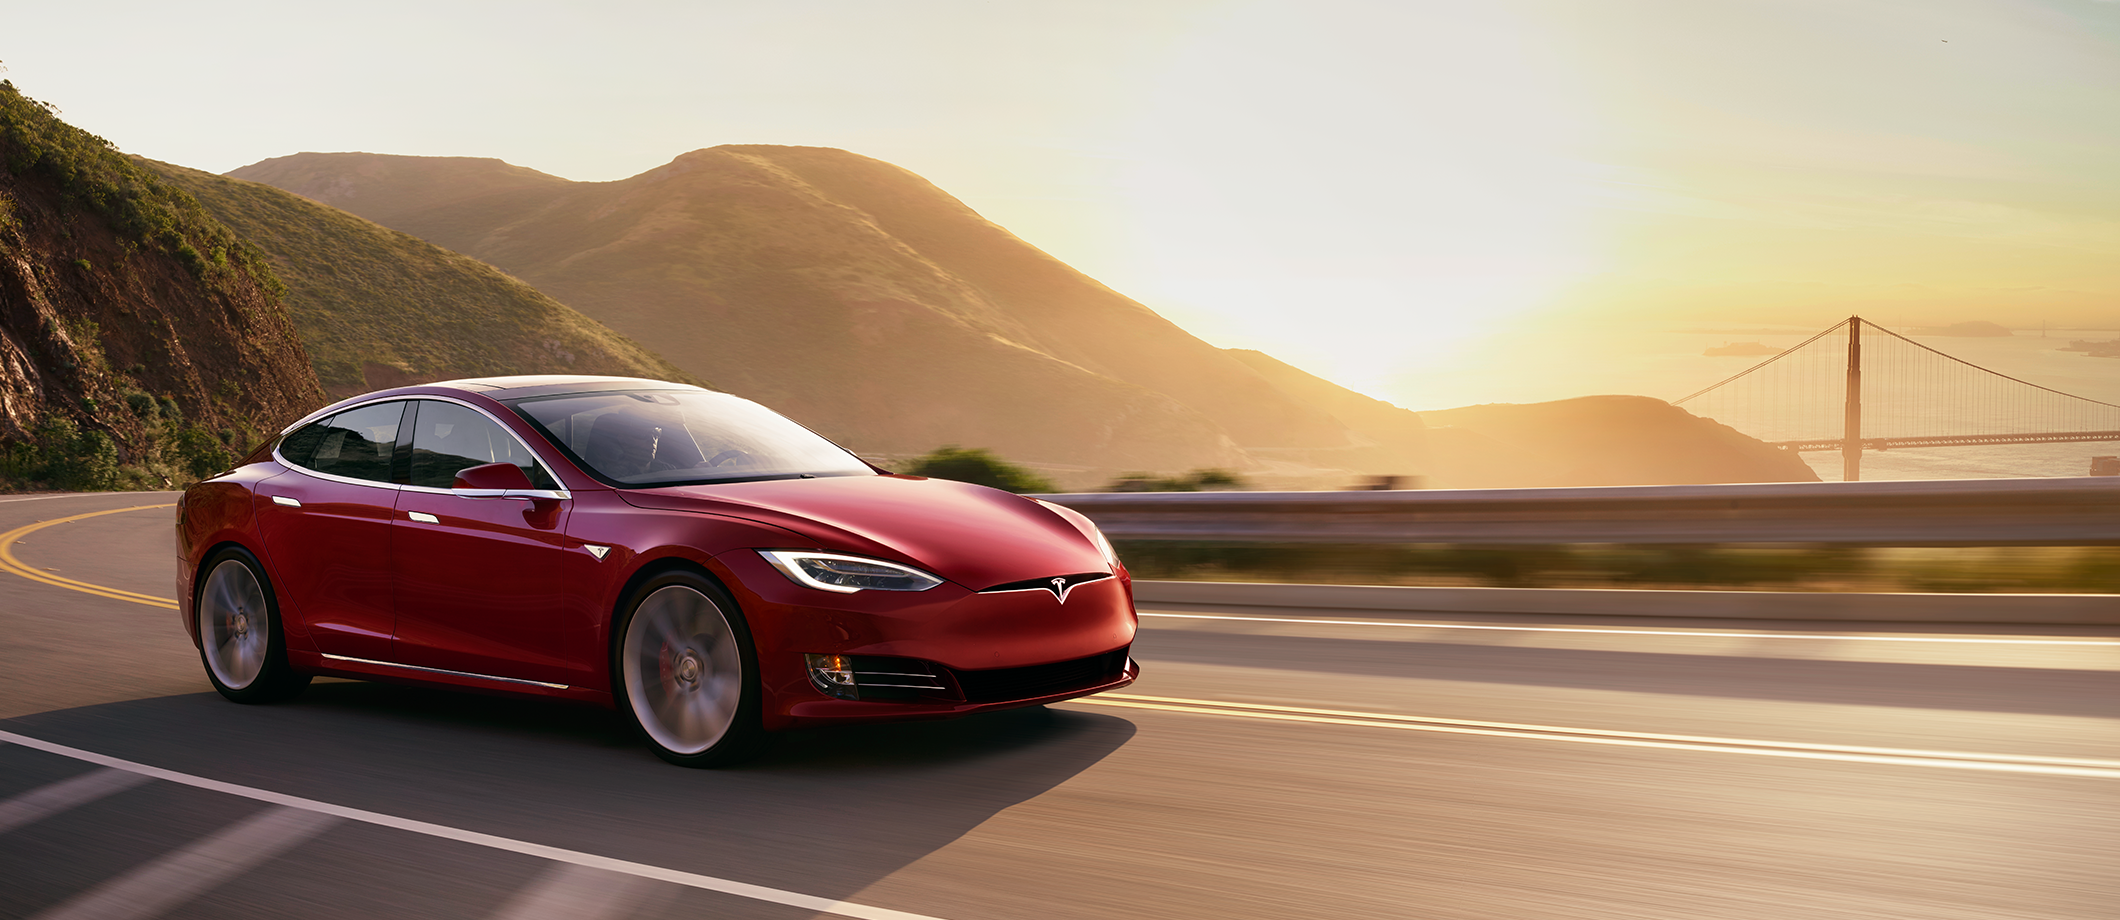 Tesla Model S Sunset